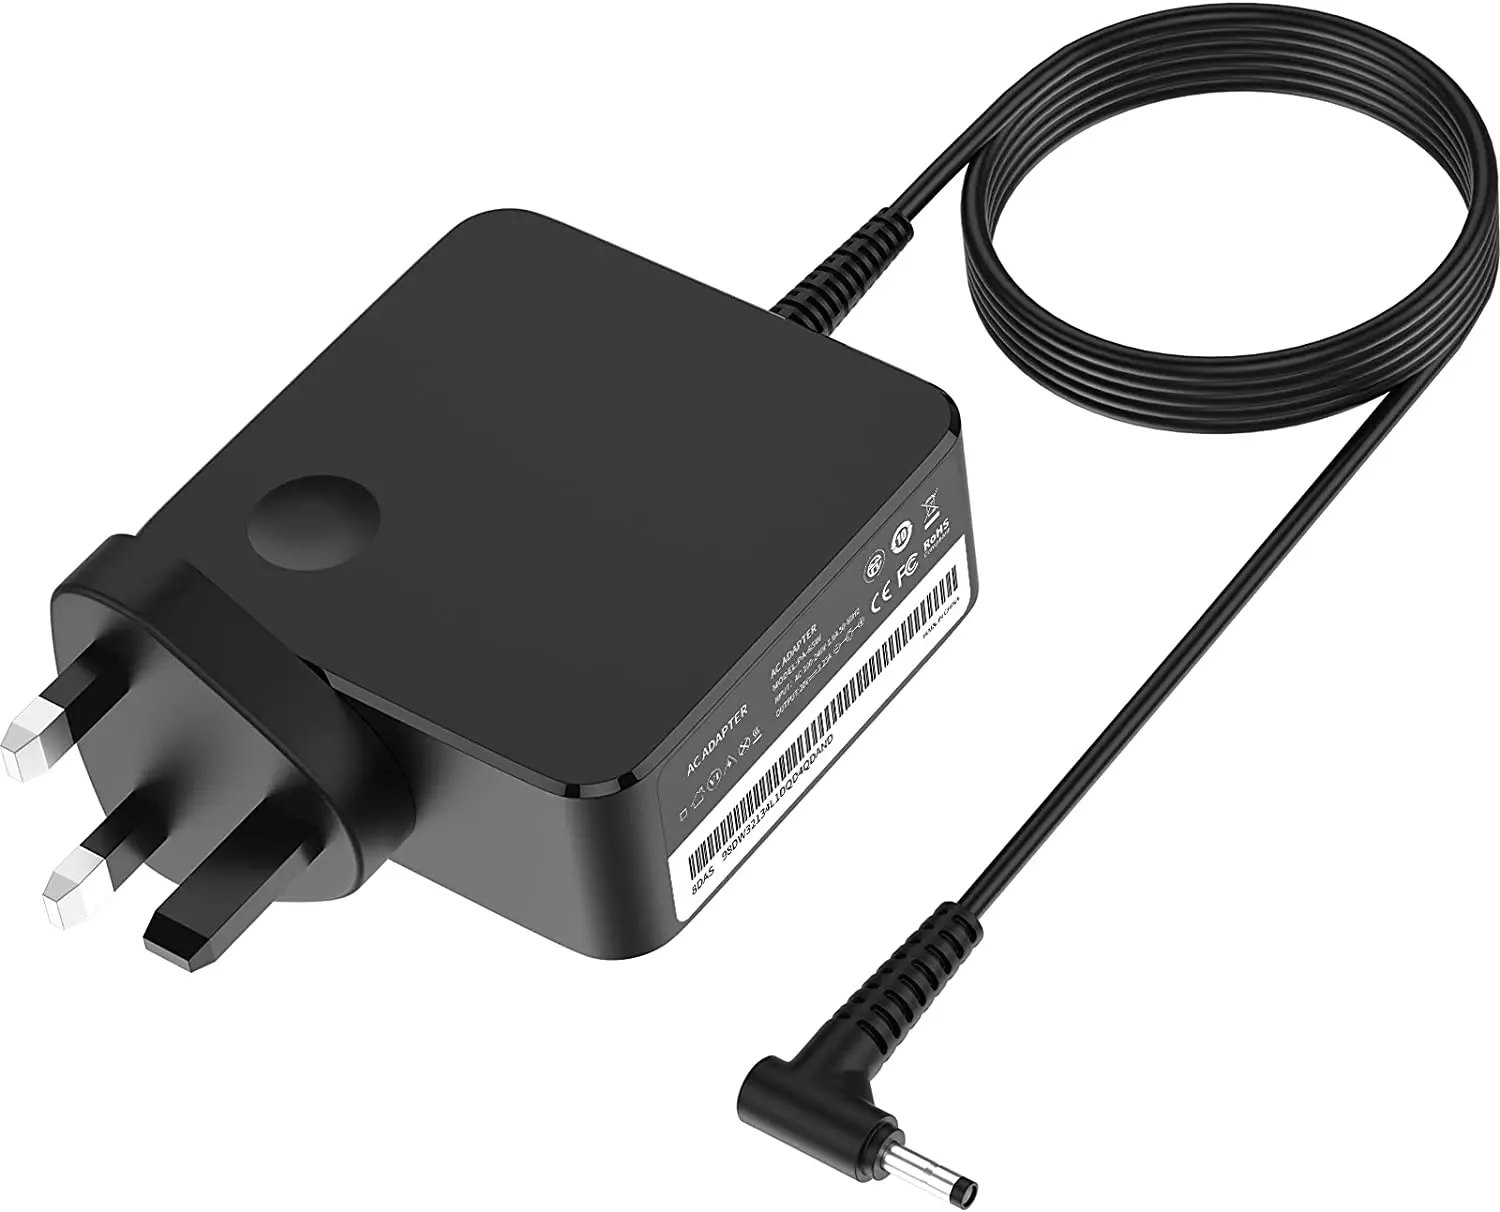 

DWO 45W Laptop AC adapter charger for Lenovo IdeaPad S130-11igm S145-15AST Yoga 310 510 520 530 B50-10 720-12IKB 130-15AST, Black